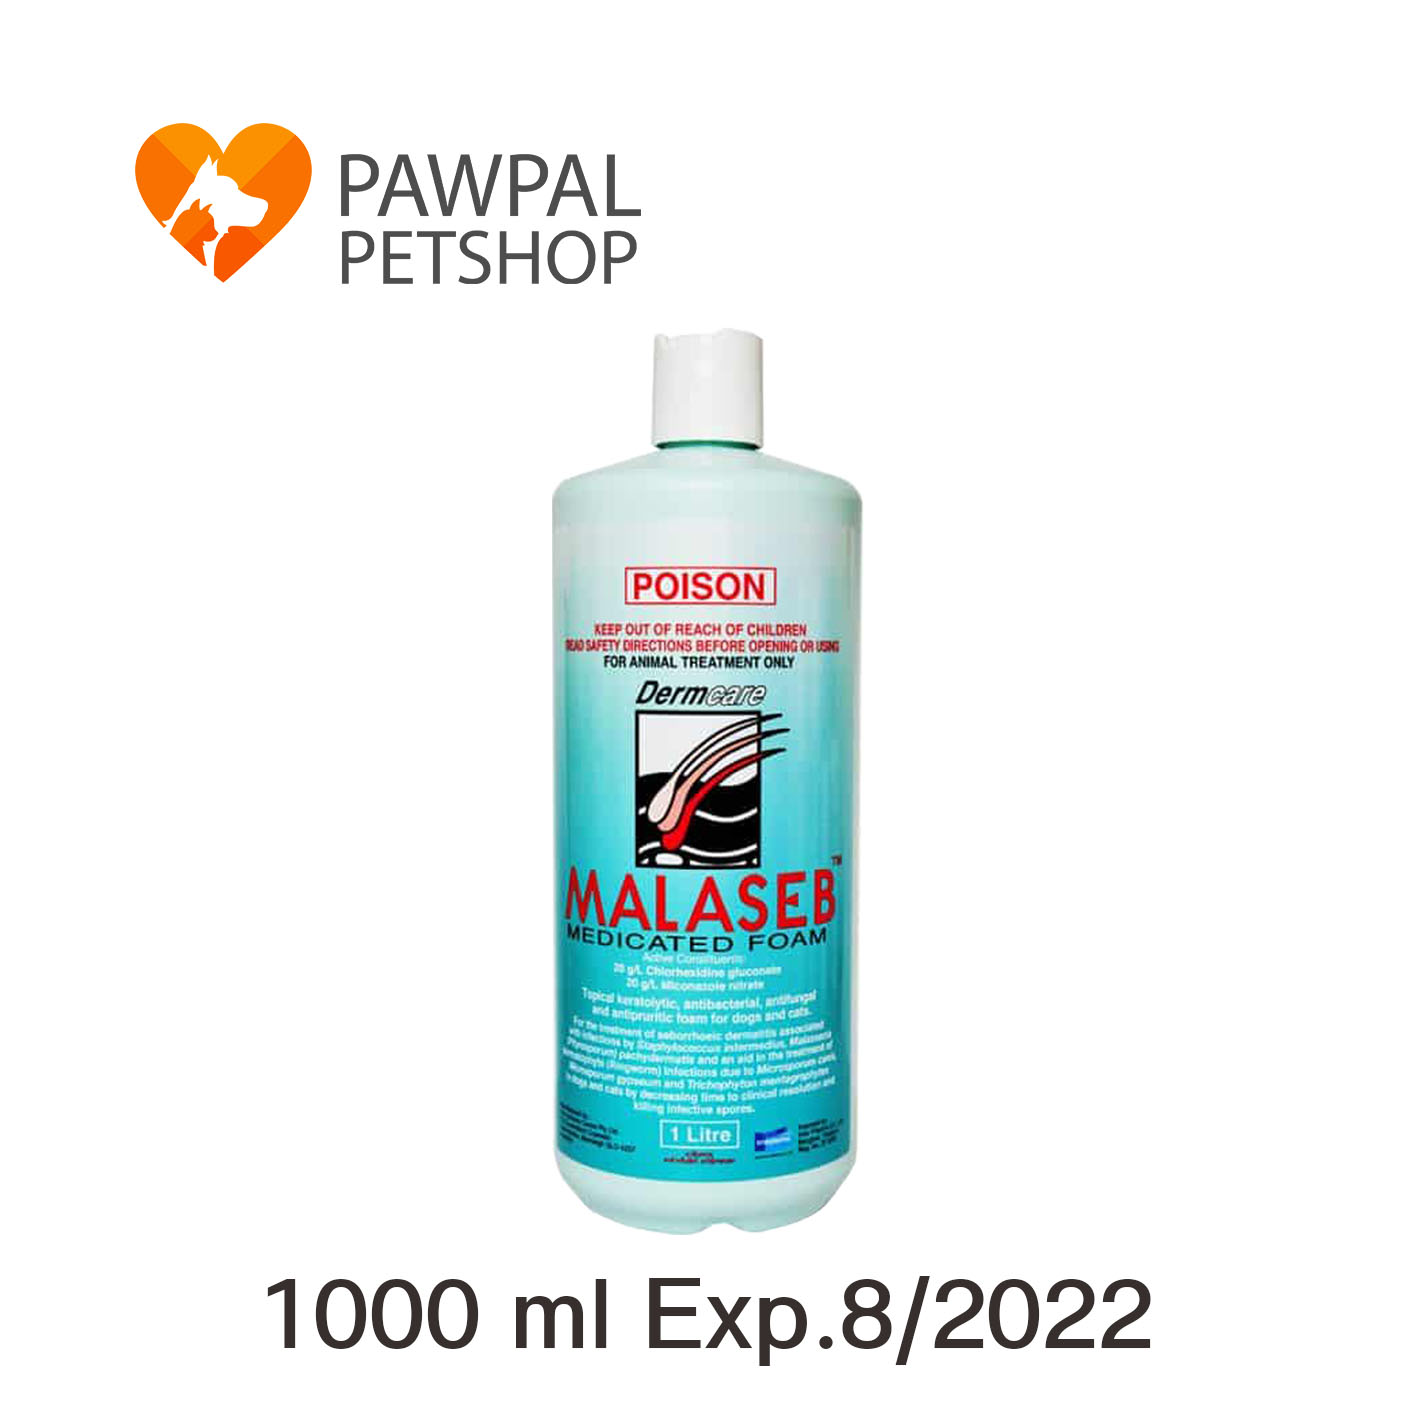 Malasebมาลาเซ็บ shampoo Exp.8/2022 1000 ml 1 ลิตร L Dermcare แชมพู อาบ ฟอก ผิวหนัง เชื้อรา ยีสต์ ลดคัน สุนัข แมว Medicated shampoo dog cat (1 ขวด)